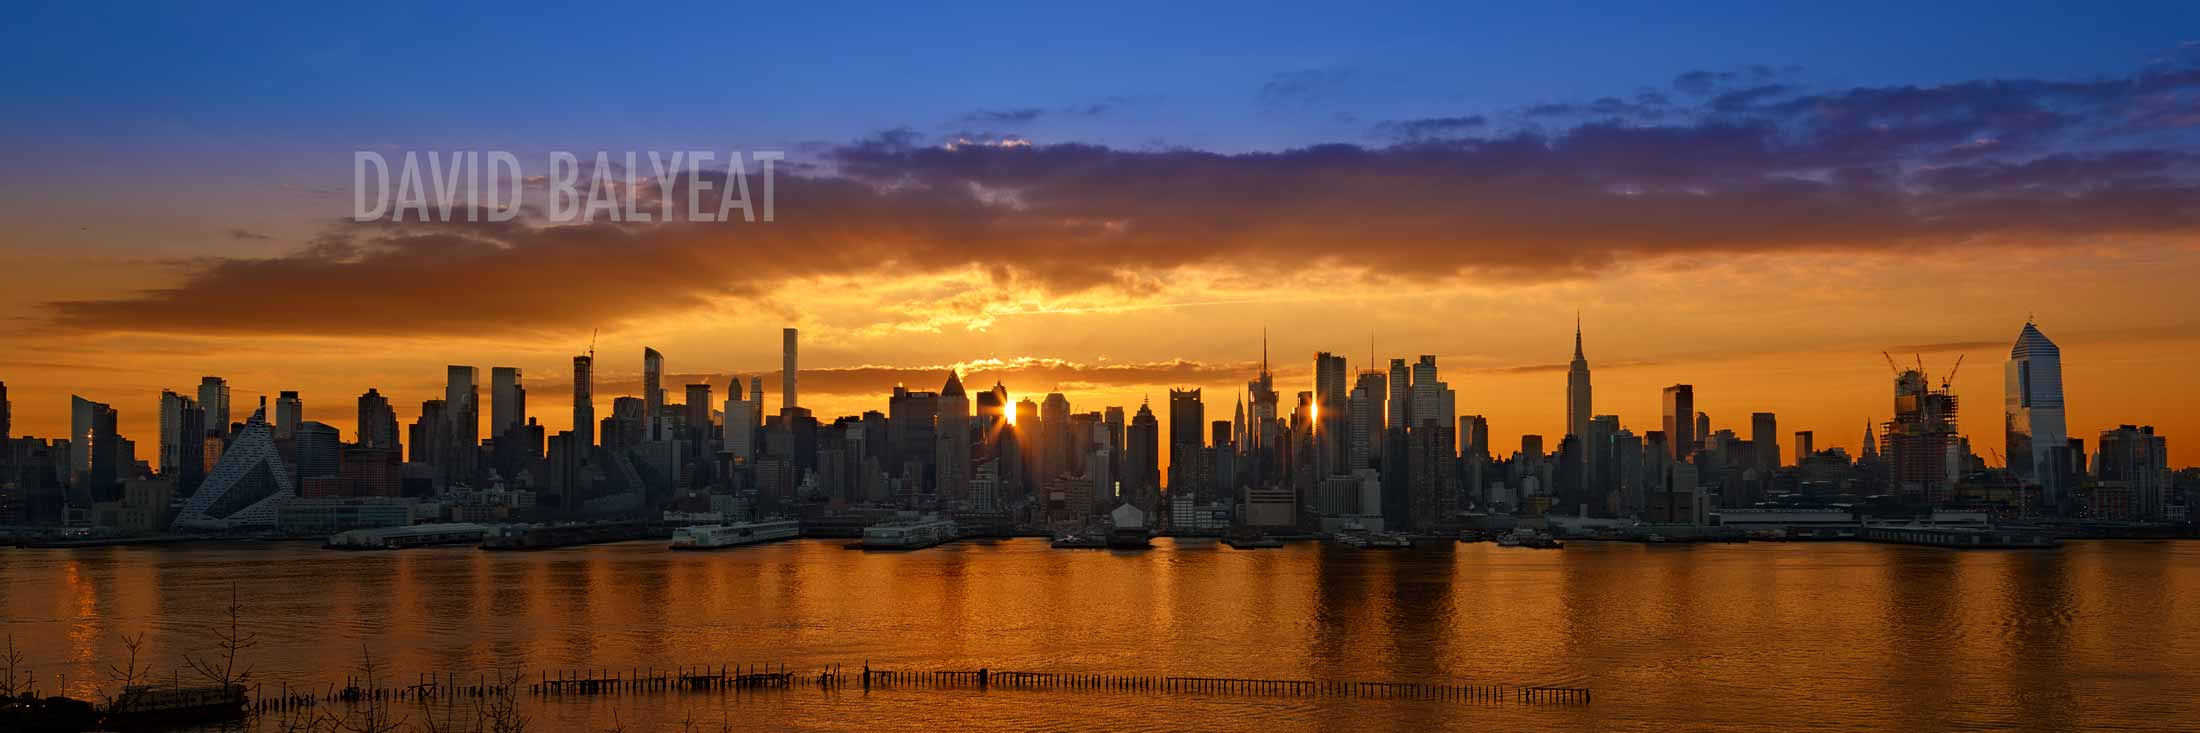 Midtown Manhattan Sunrise 2017 New York City fine art landscape photography